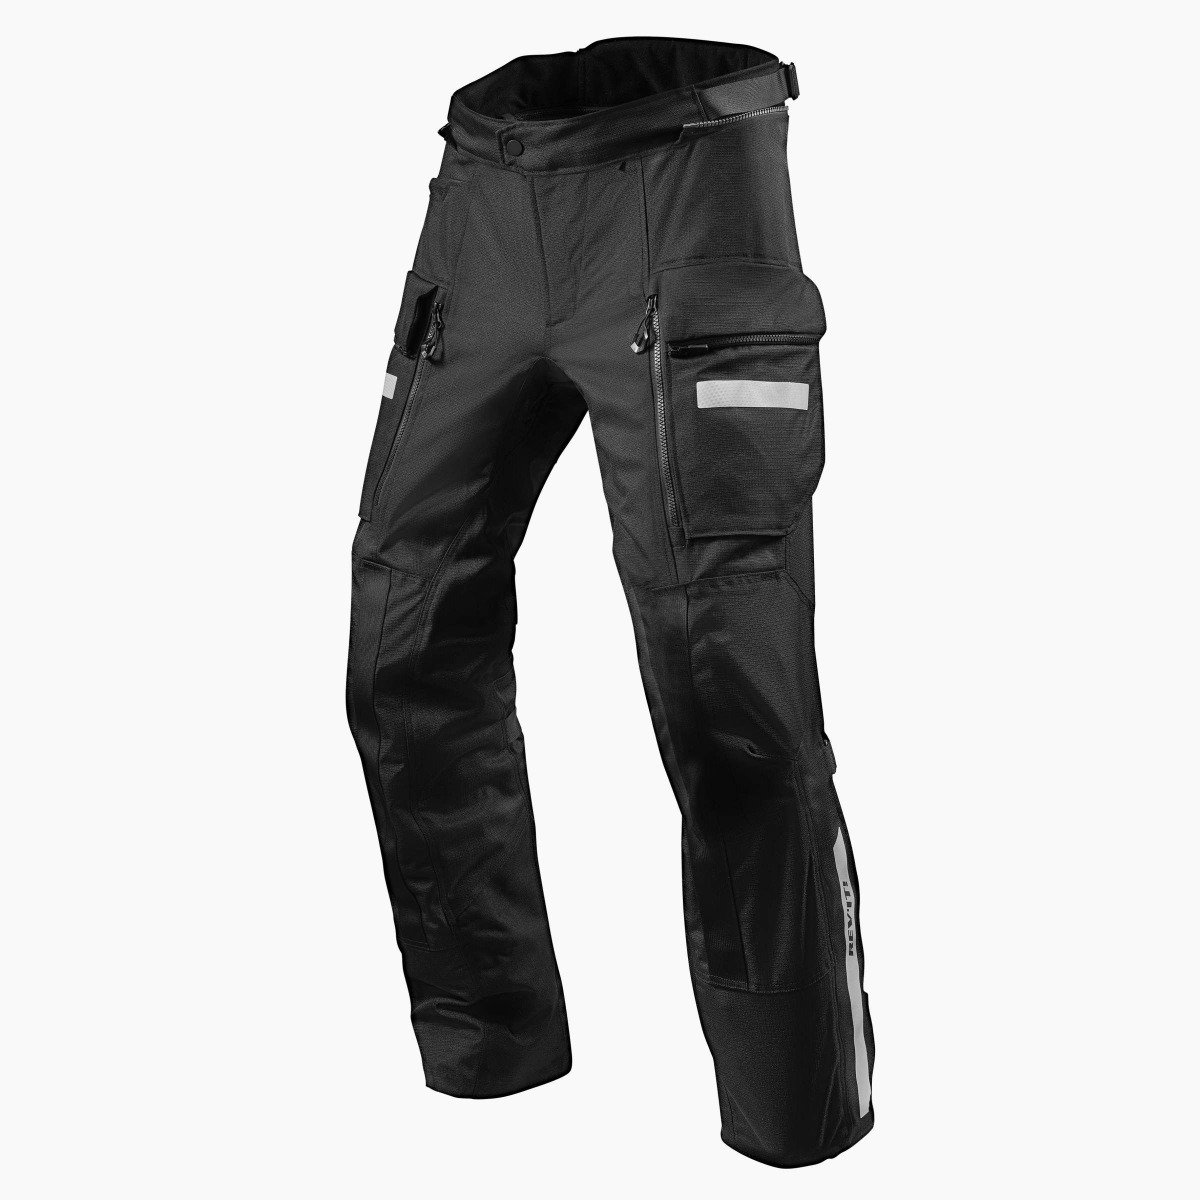 Image of REV'IT! Sand 4 H2O Standard Noir Pantalon Taille S